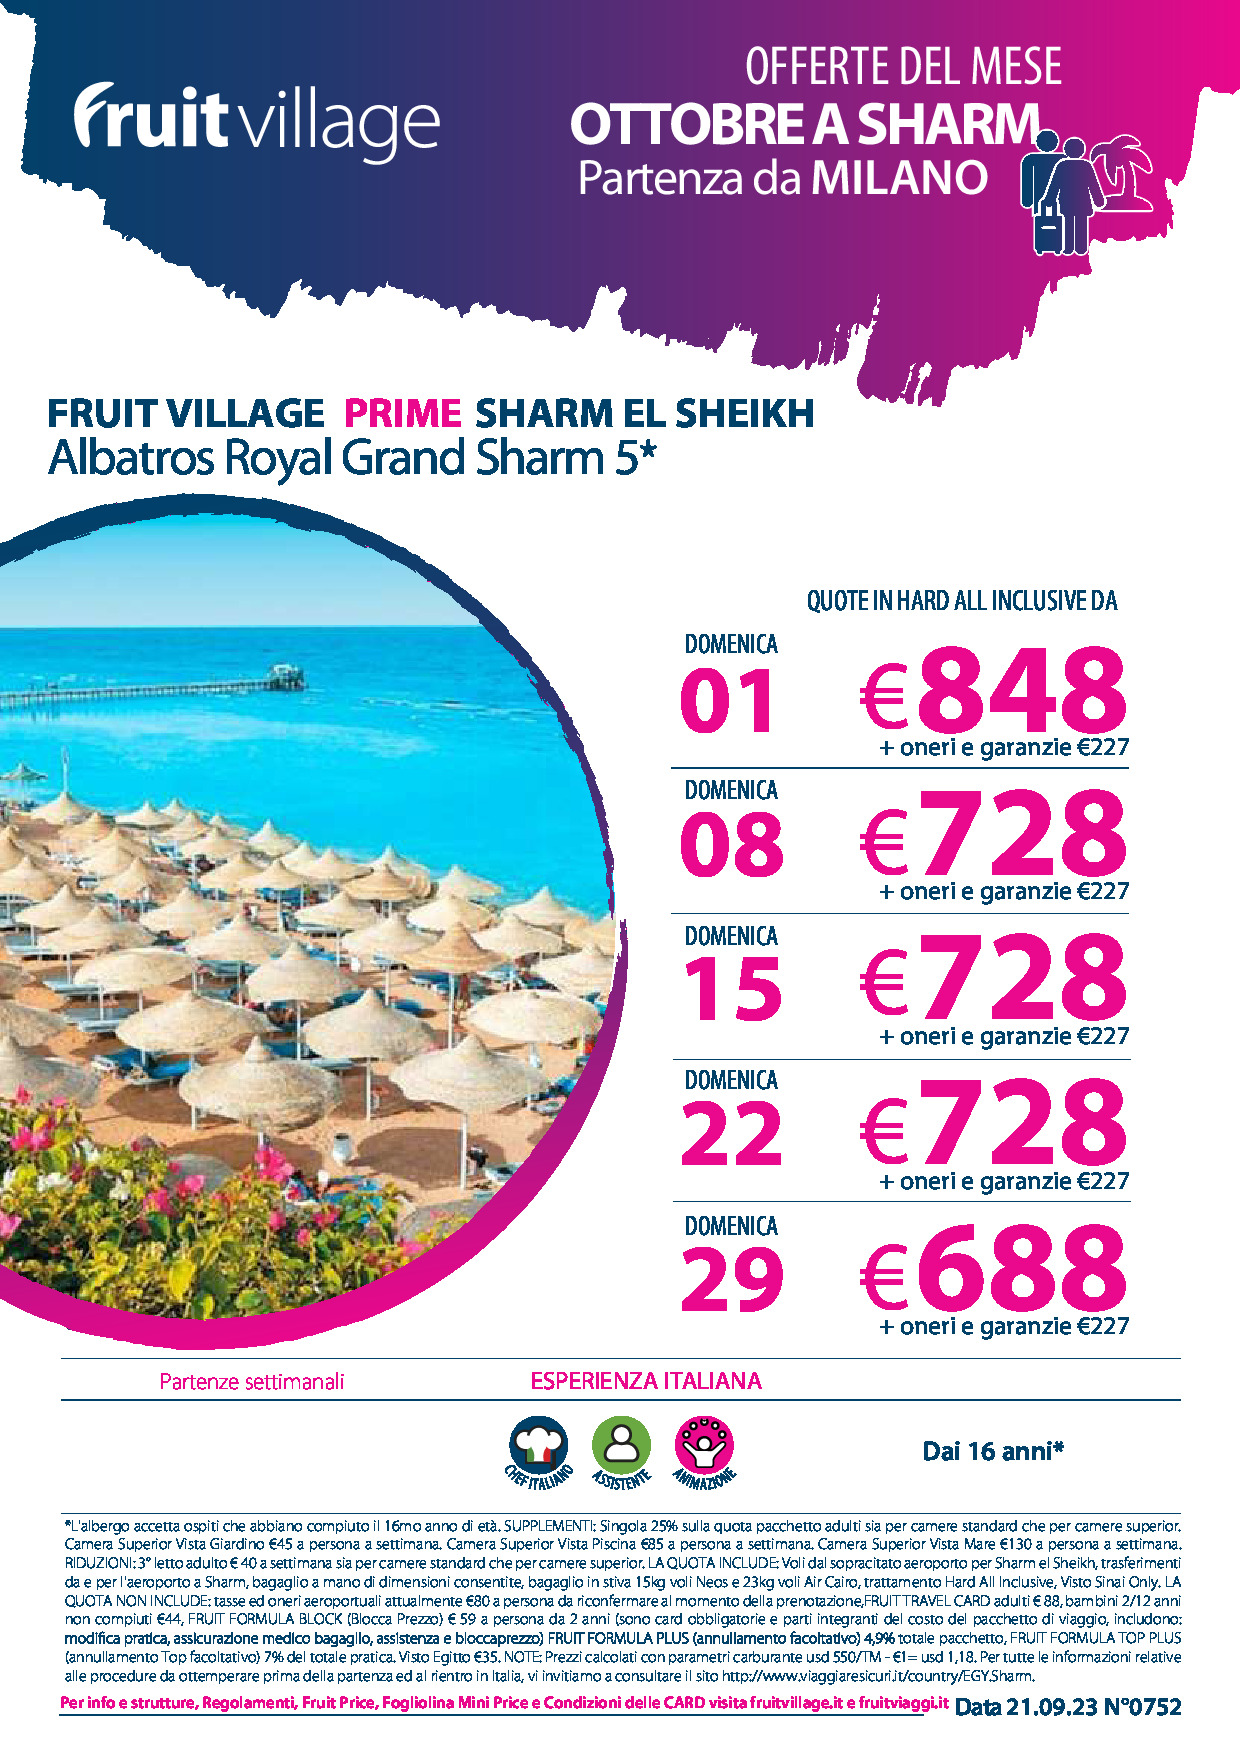 FRUIT VILLAGE PRIME Albatros Royal Grand Sharm 5* - da Milano a Ottobre